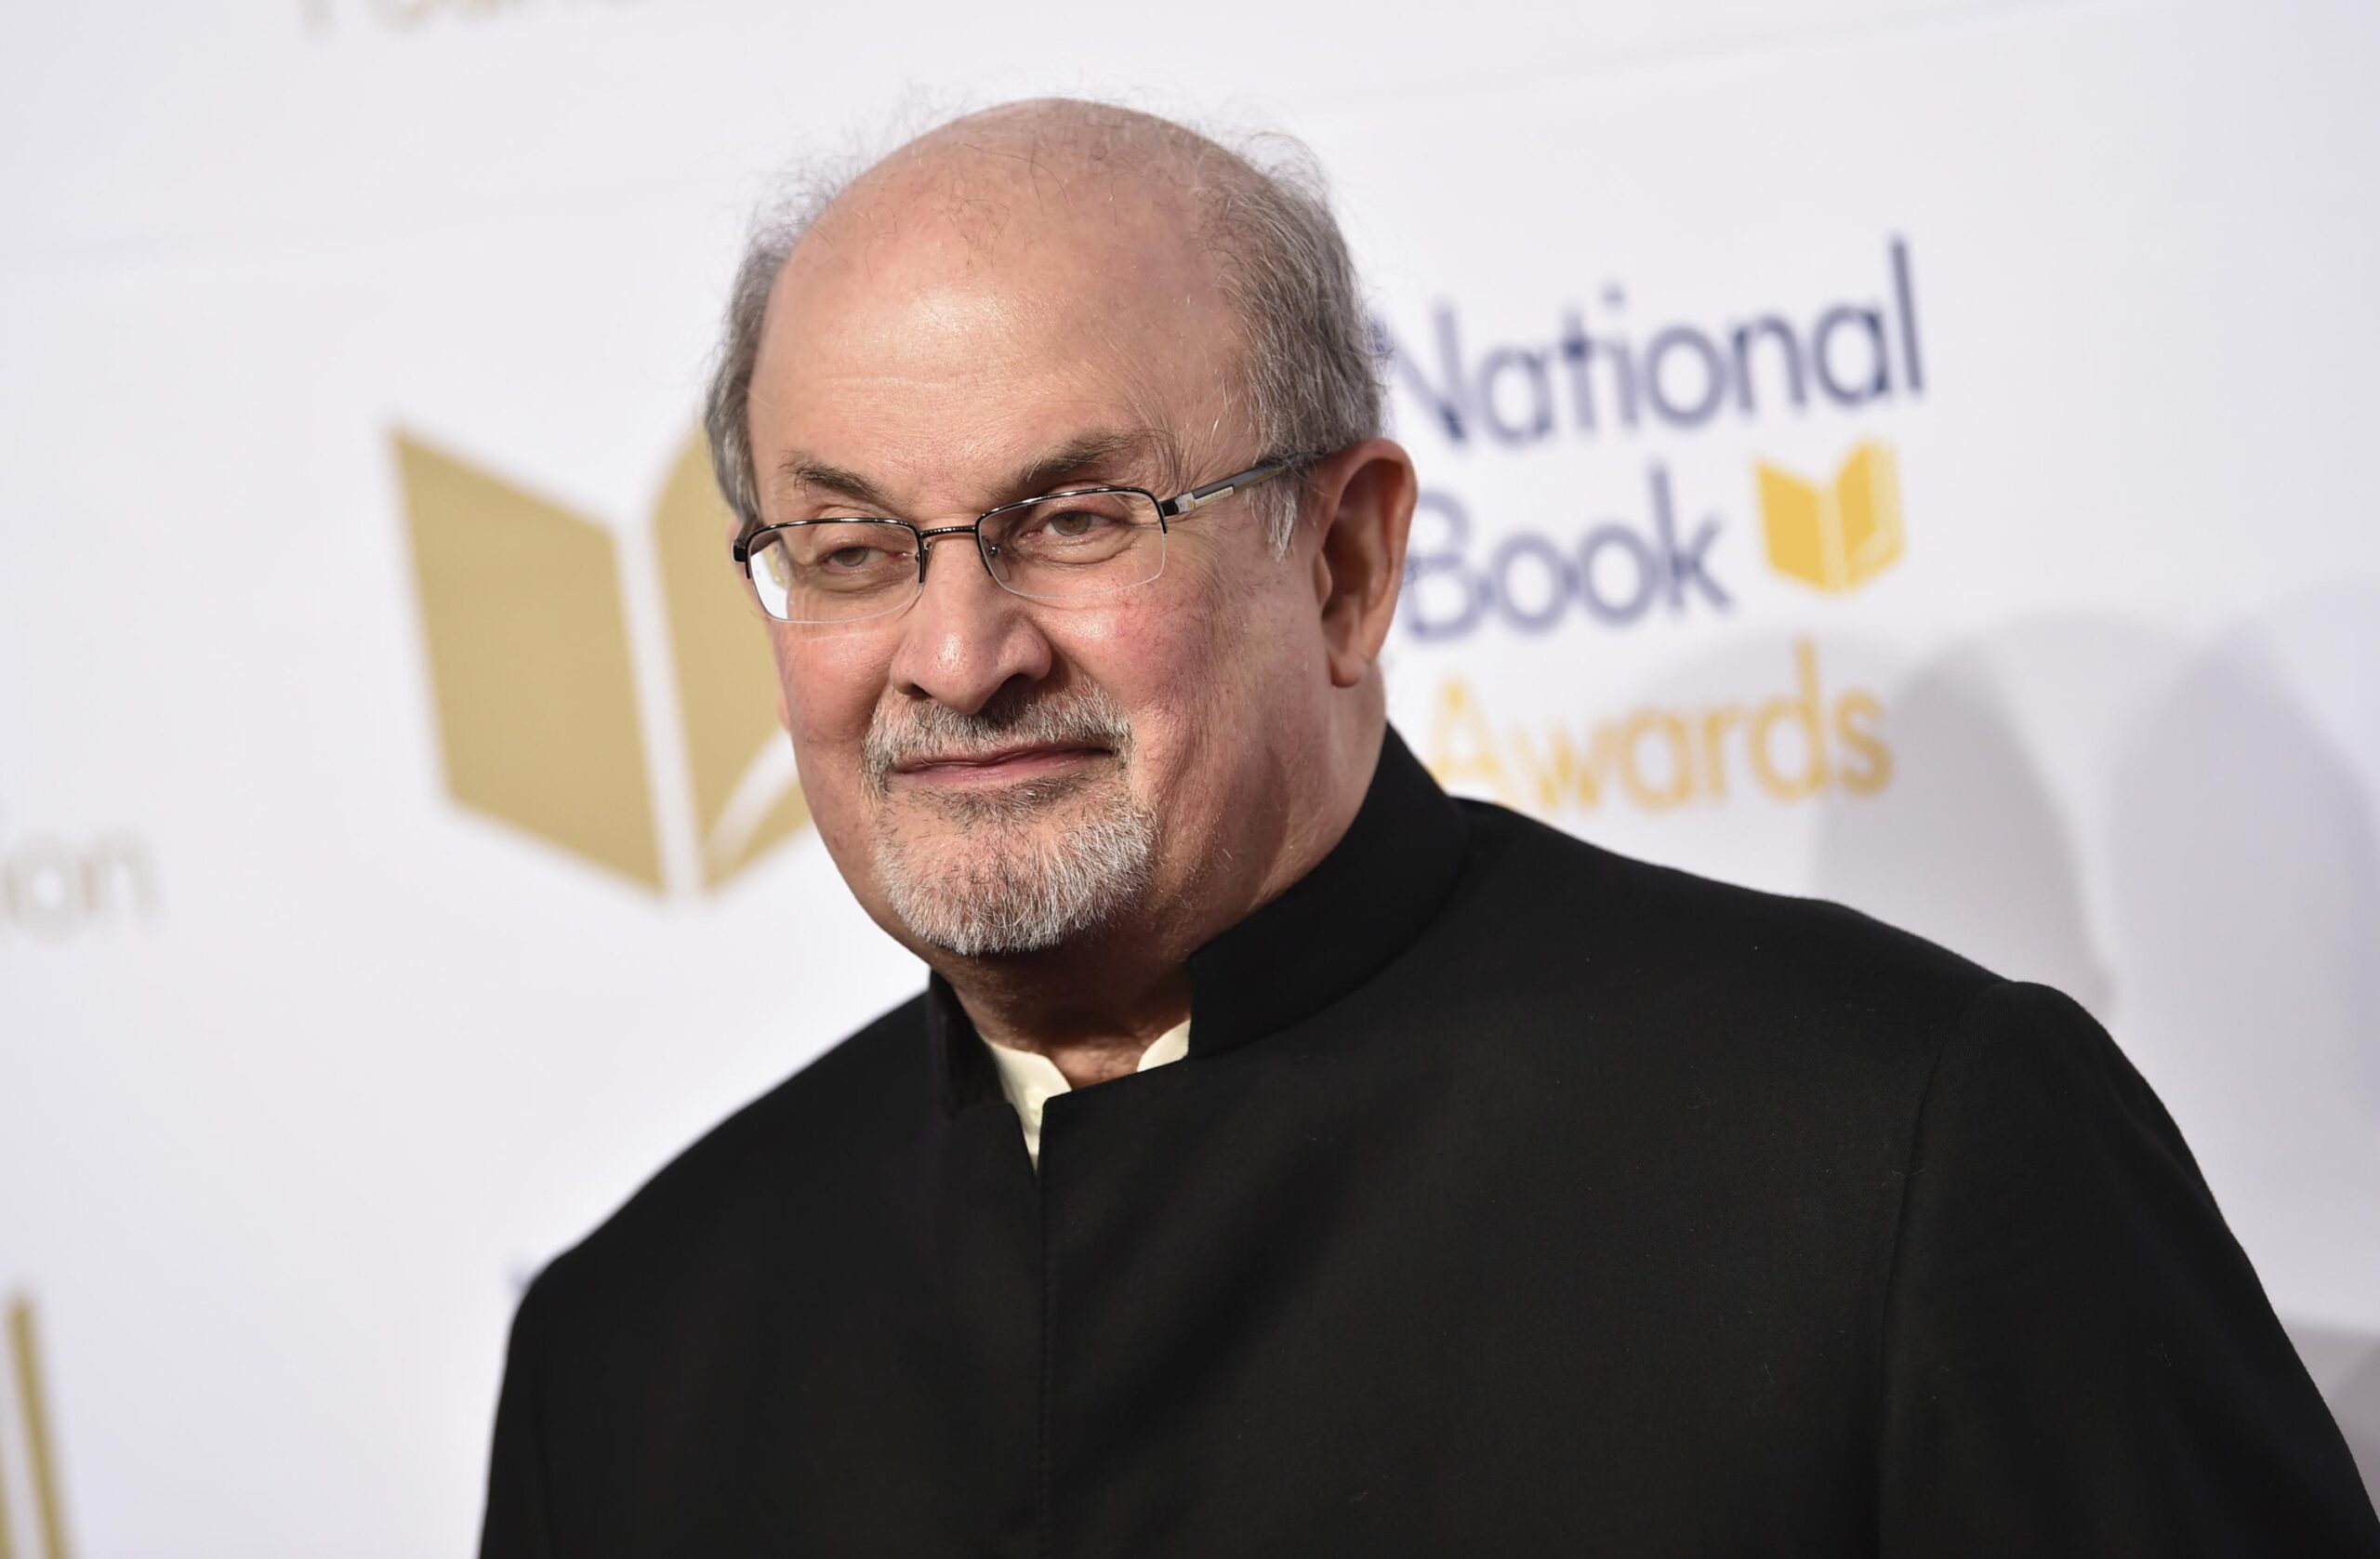 Iran denies involvement but justifies Salman Rushdie's attack